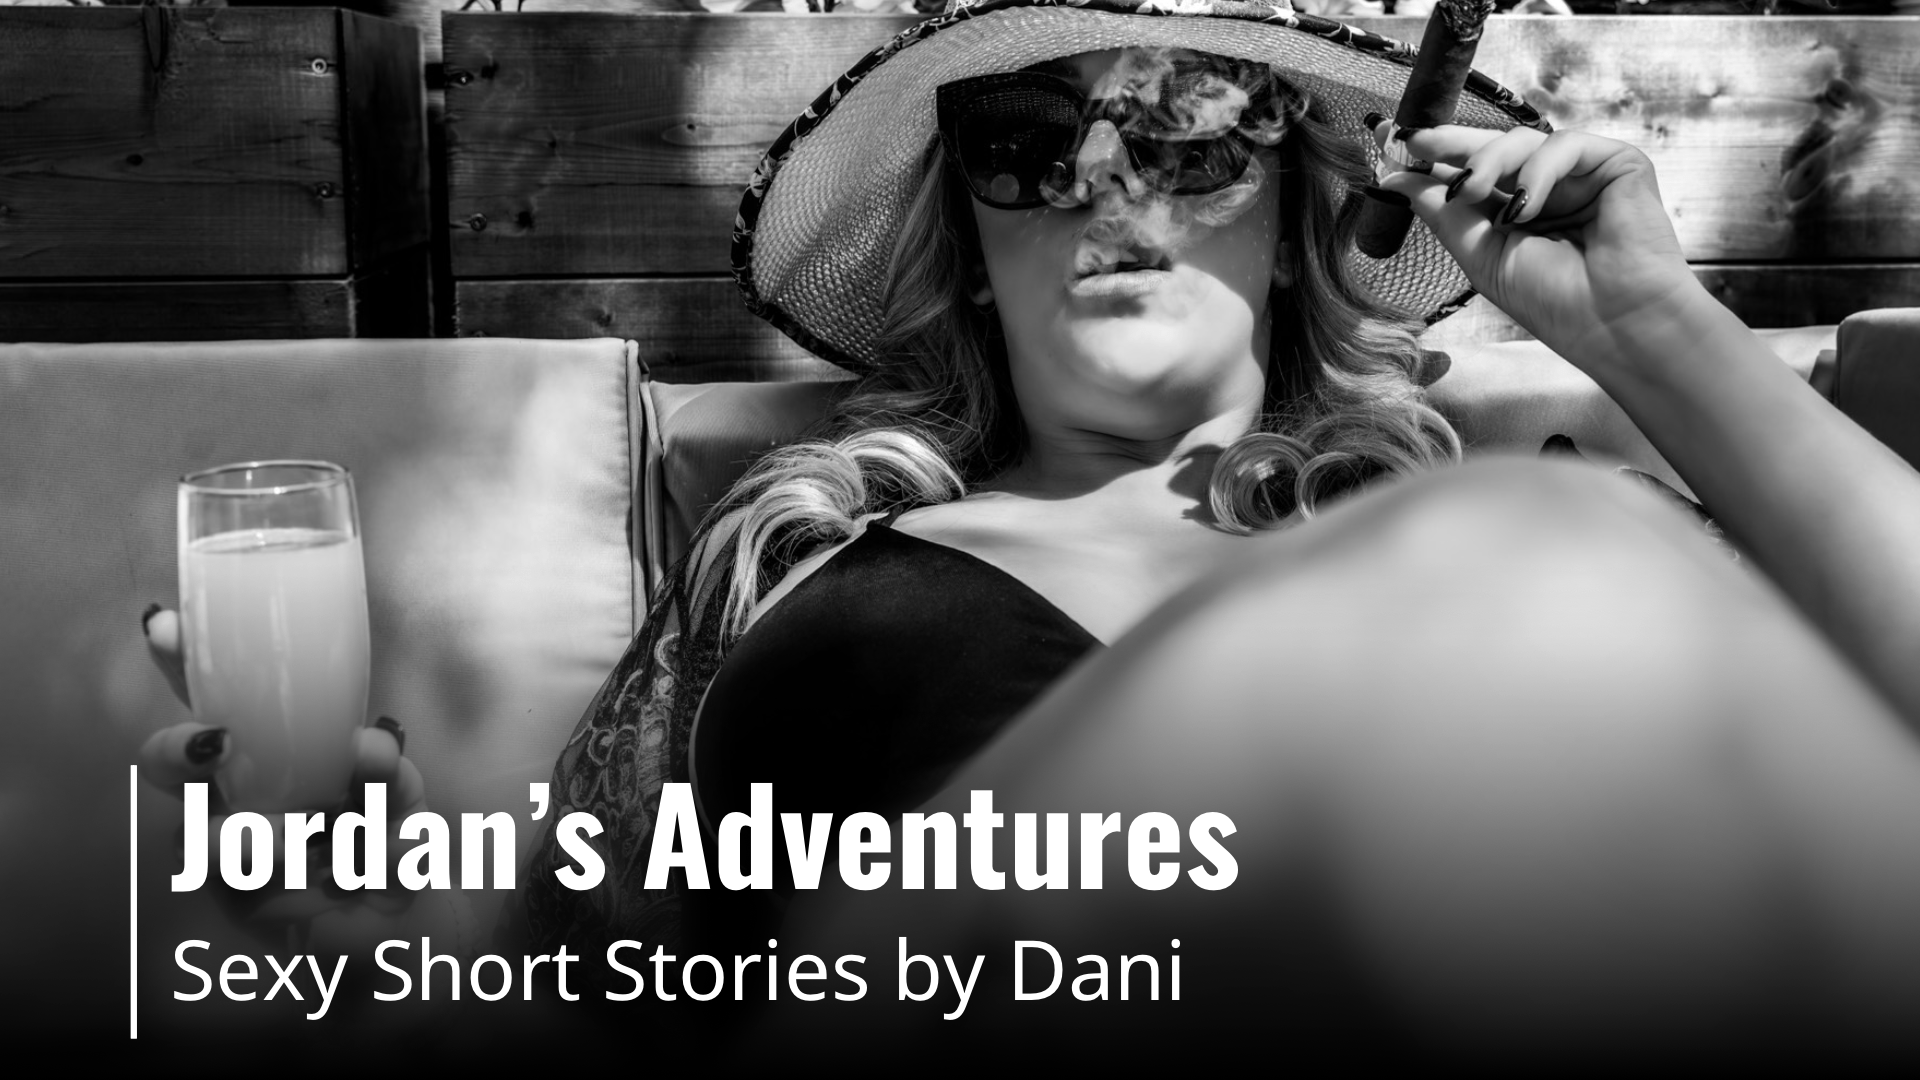 Jordan’s Adventures “The Lounge” Sexy Short Stories by Dani